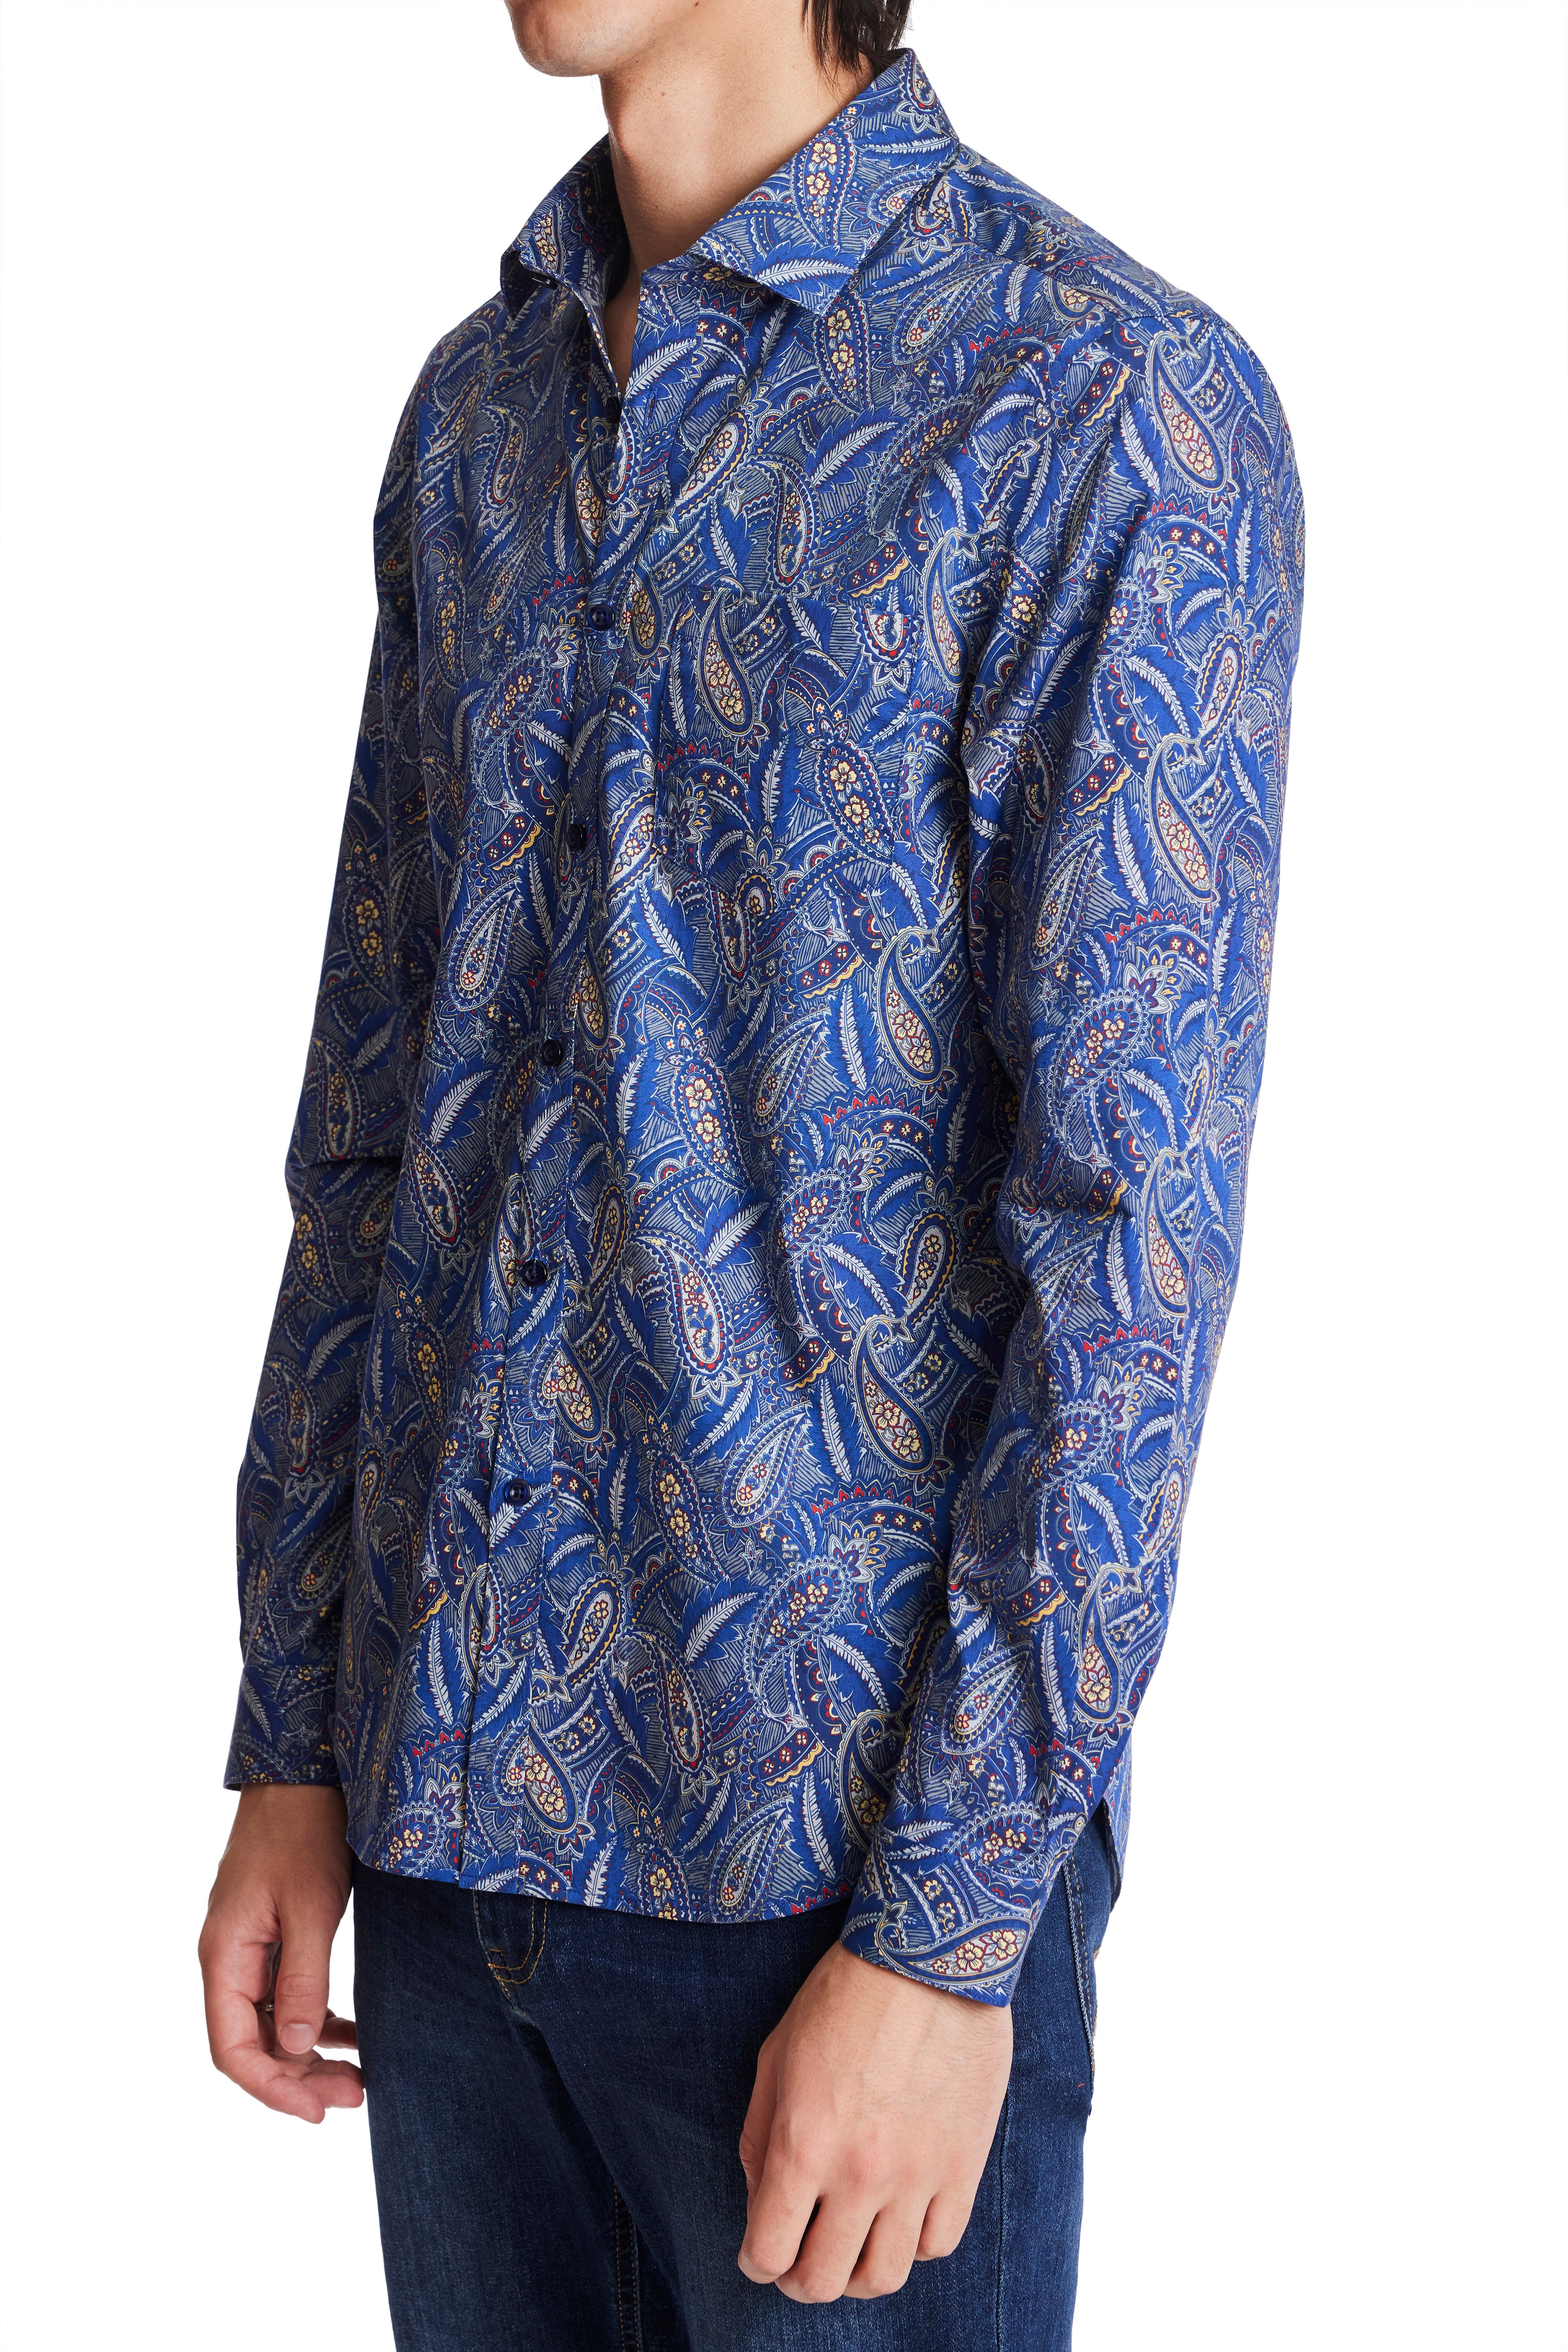 Samuel Spread Collar Shirt - New Blue Paisley